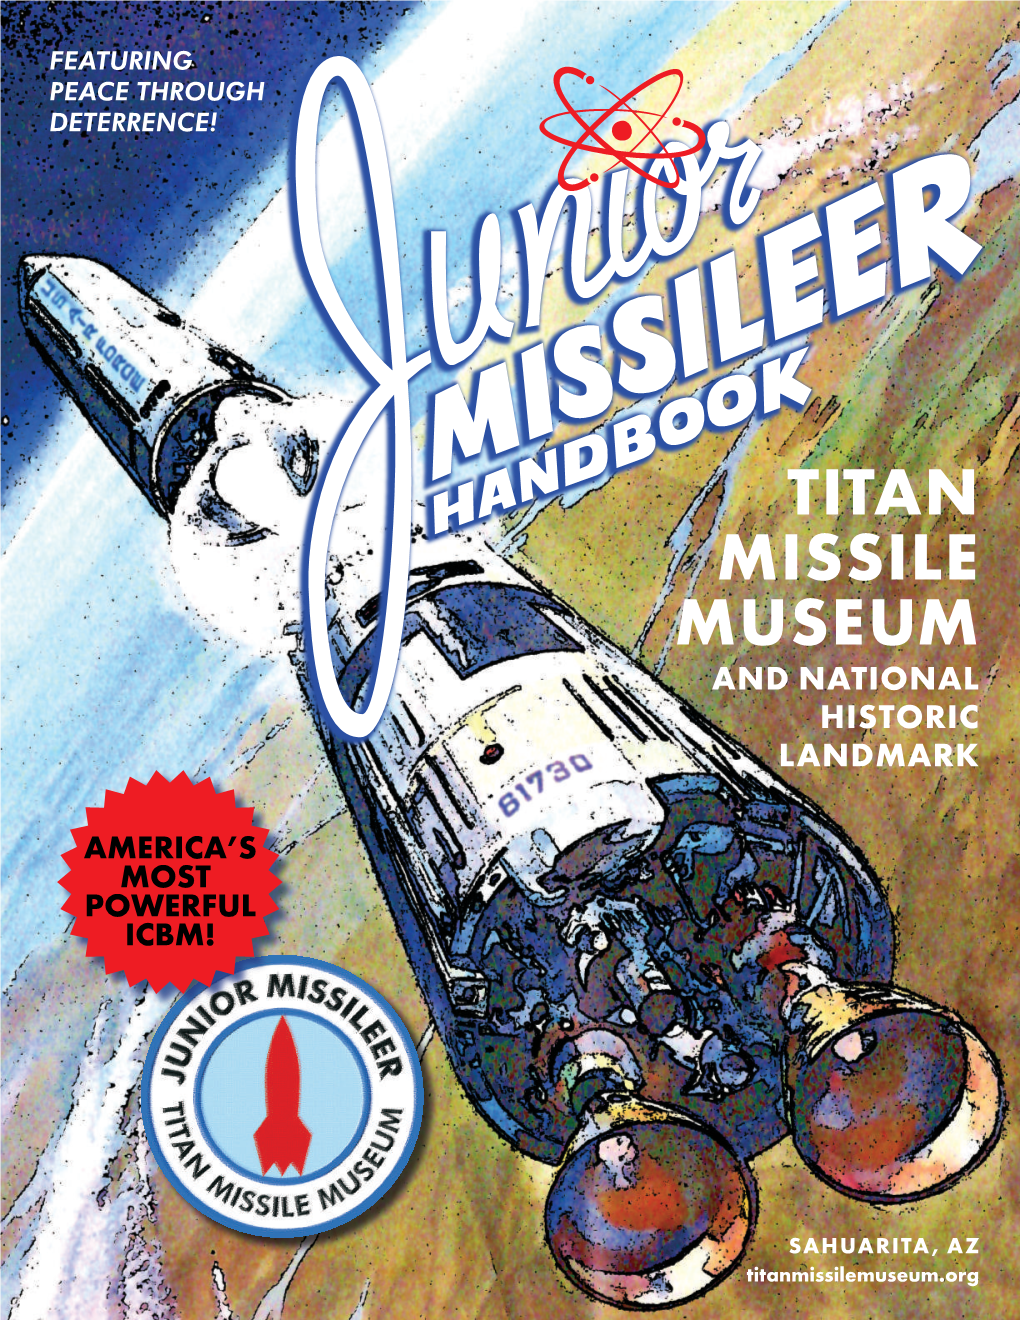 Titan Missile Museum and National Historic Landmark